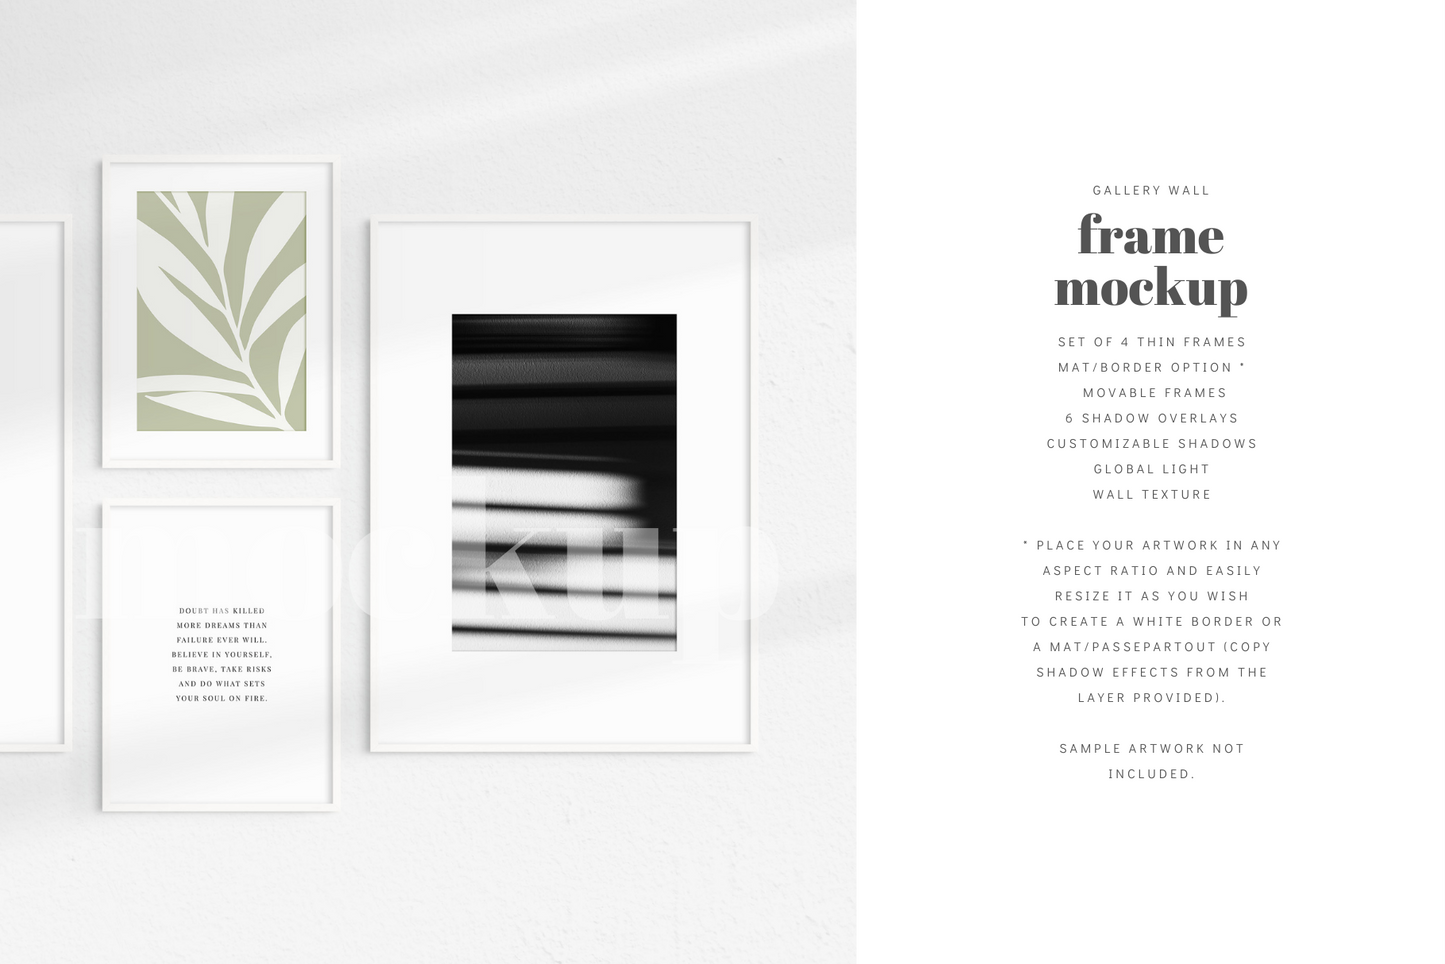 Gallery Wall Mockup | Set of 4 Frames | Frame Mockup | White | PSD